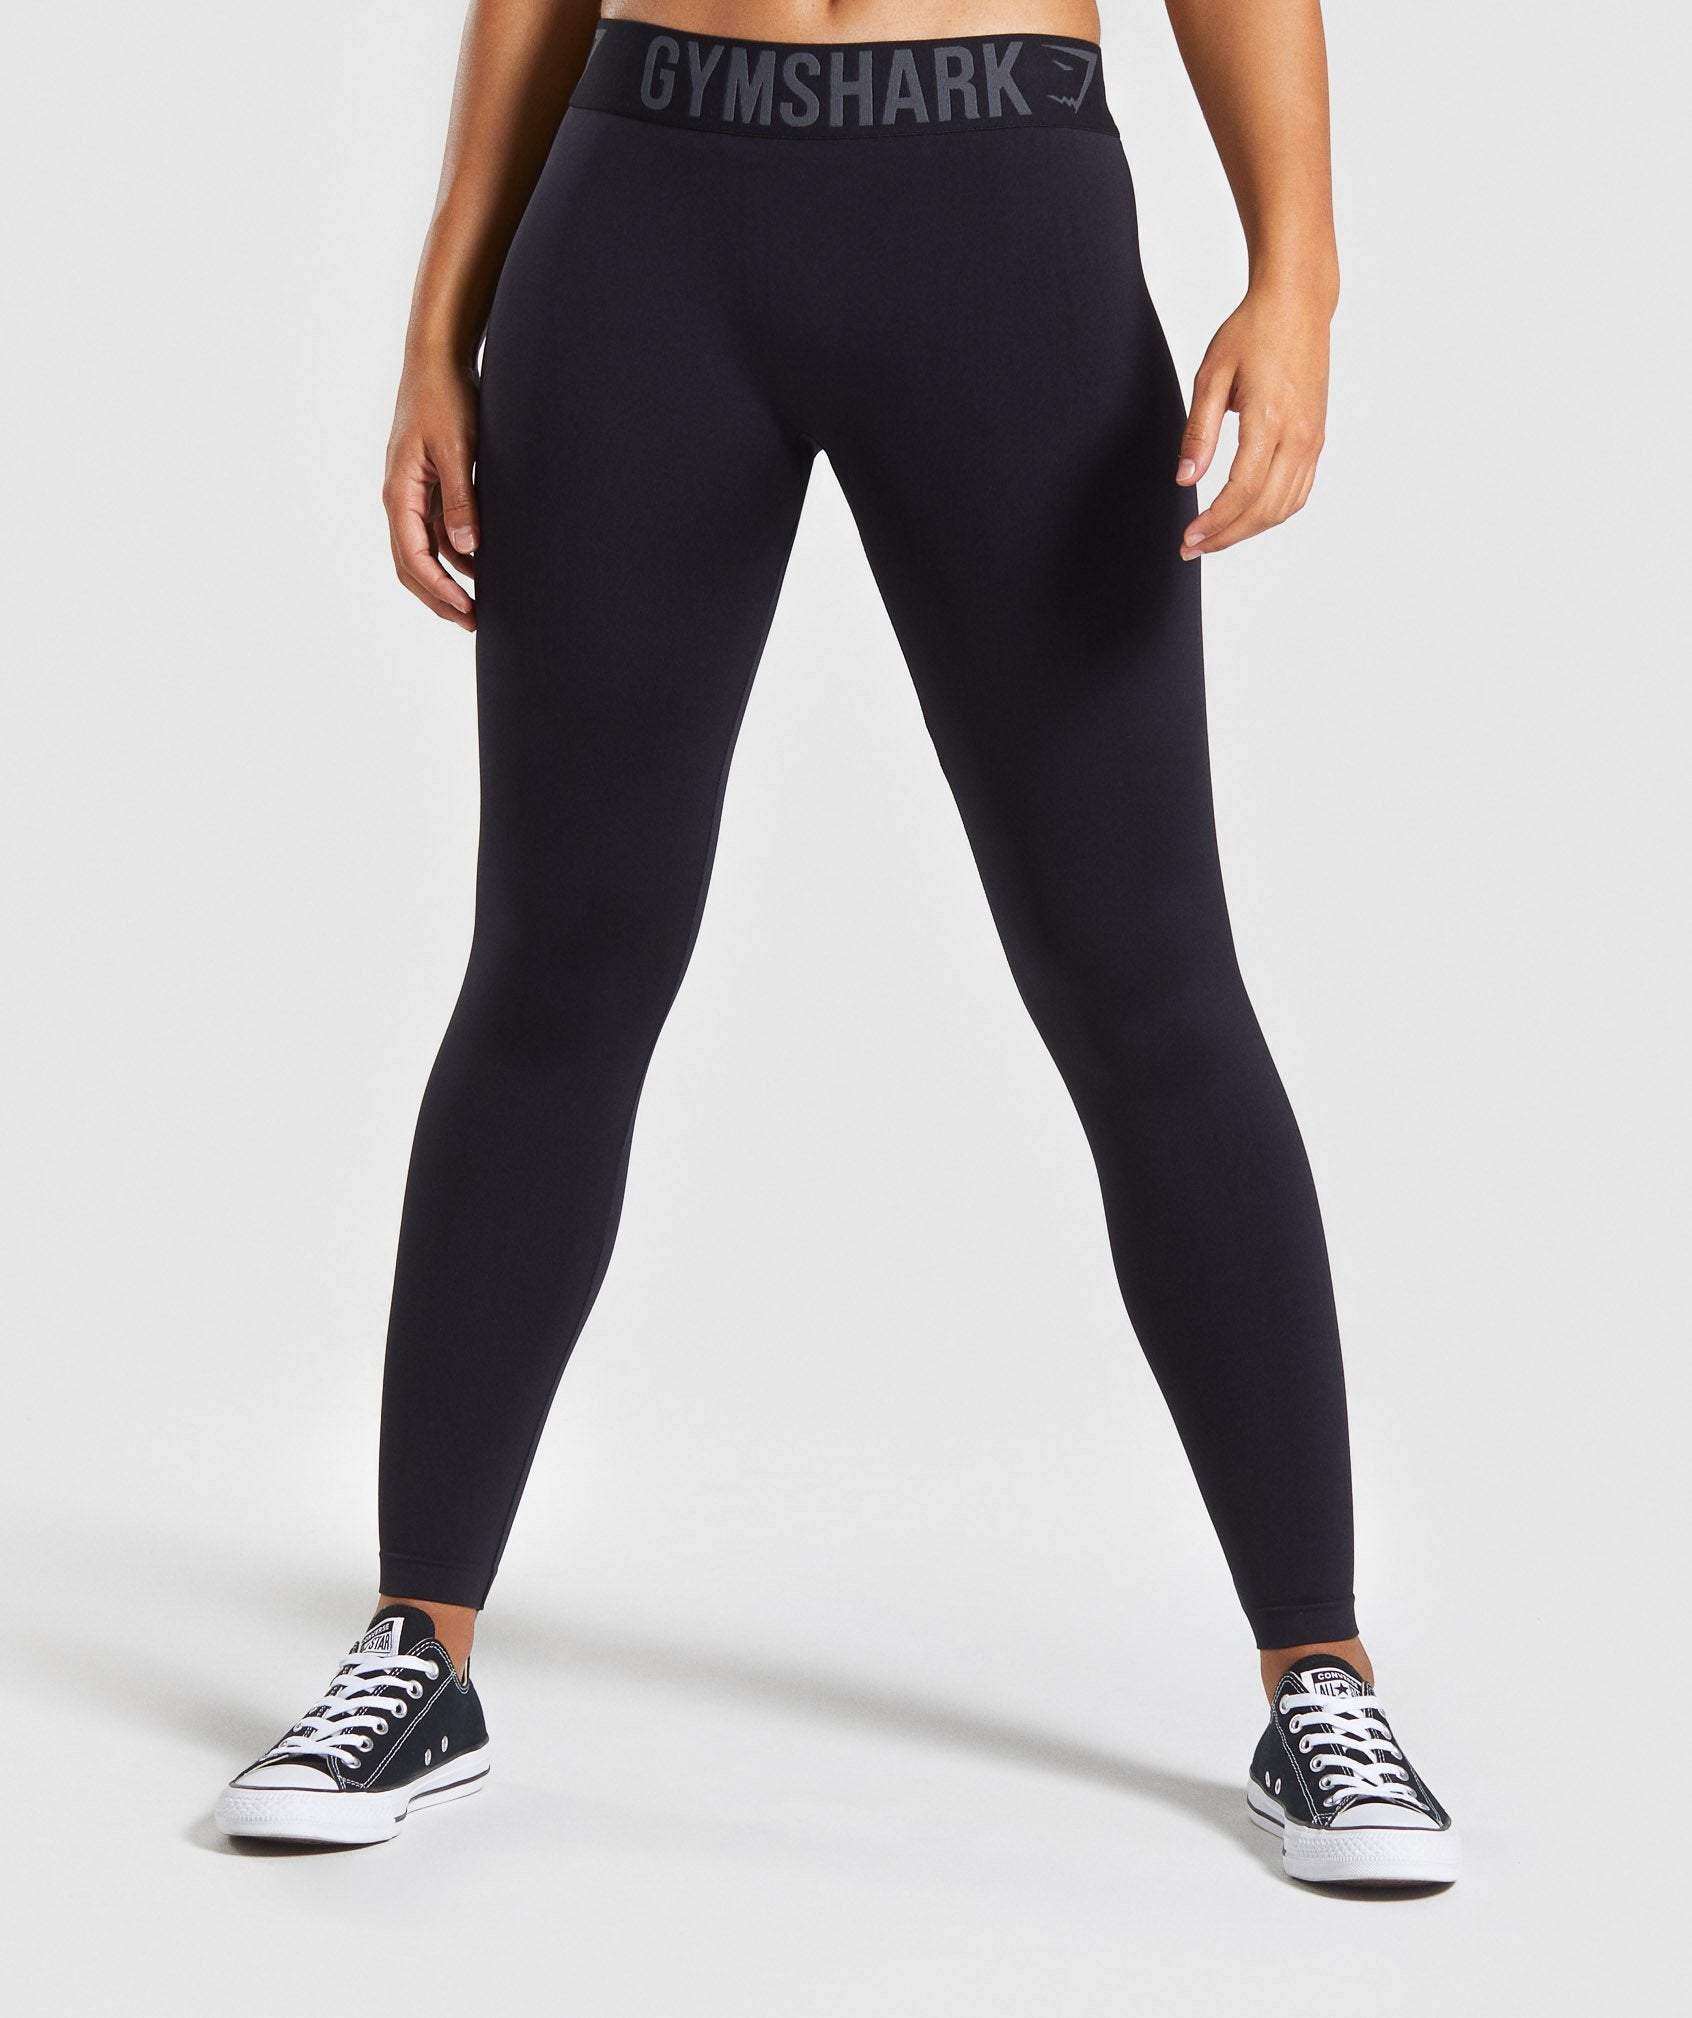 Buy the Gym Shark Women Black Activewear Leggings XS